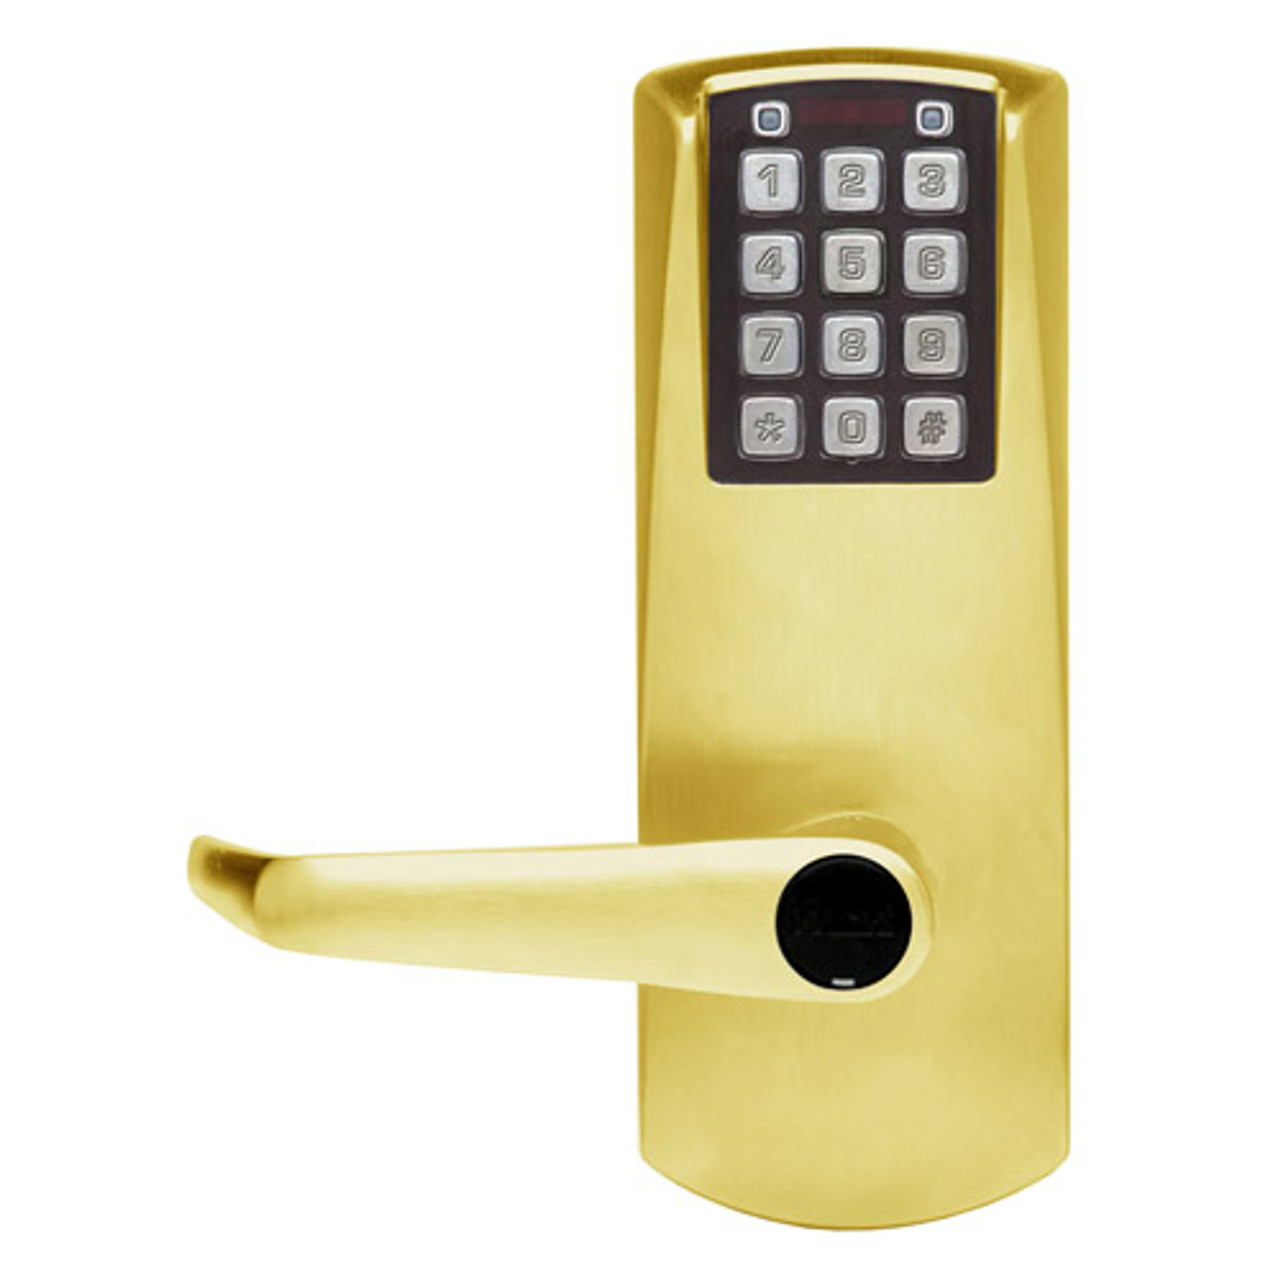 Eplex Pushbutton Lock in Satin Brass Finish